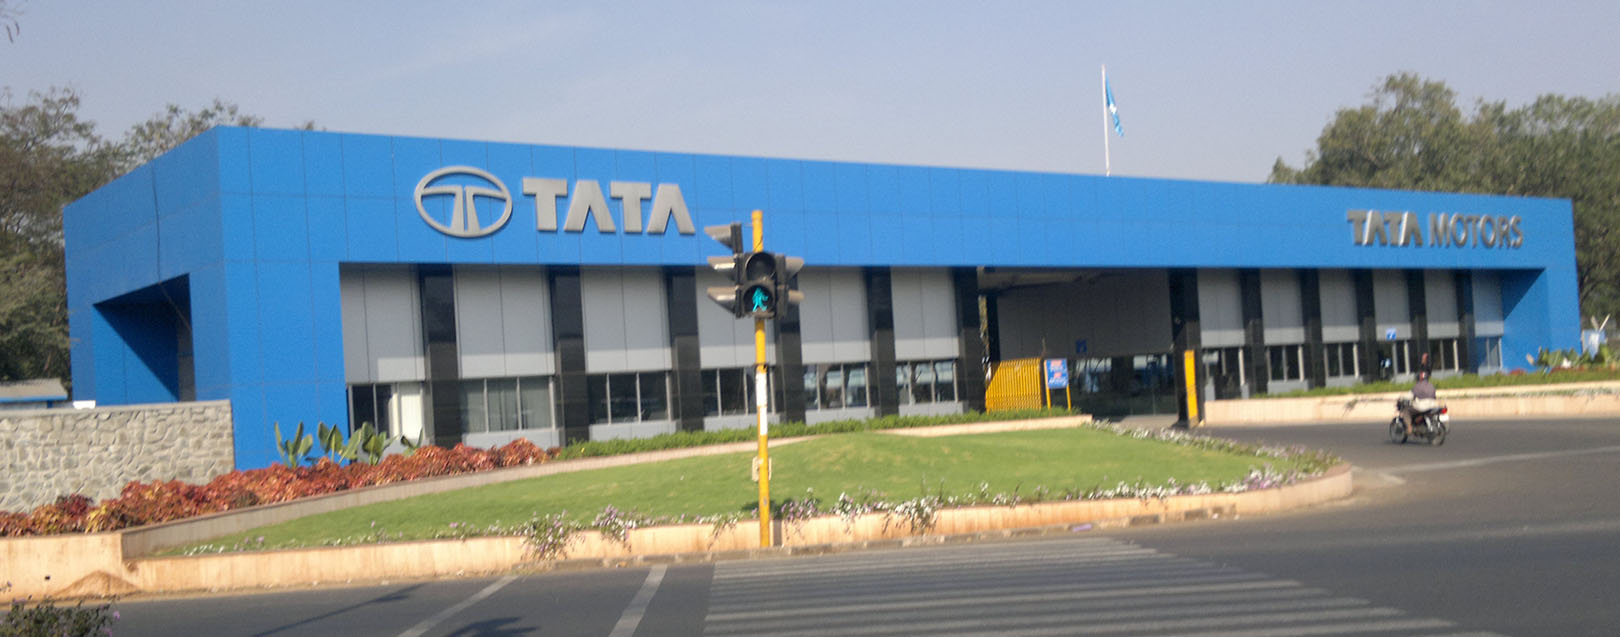 Tata Motors to set up innovation centres globally